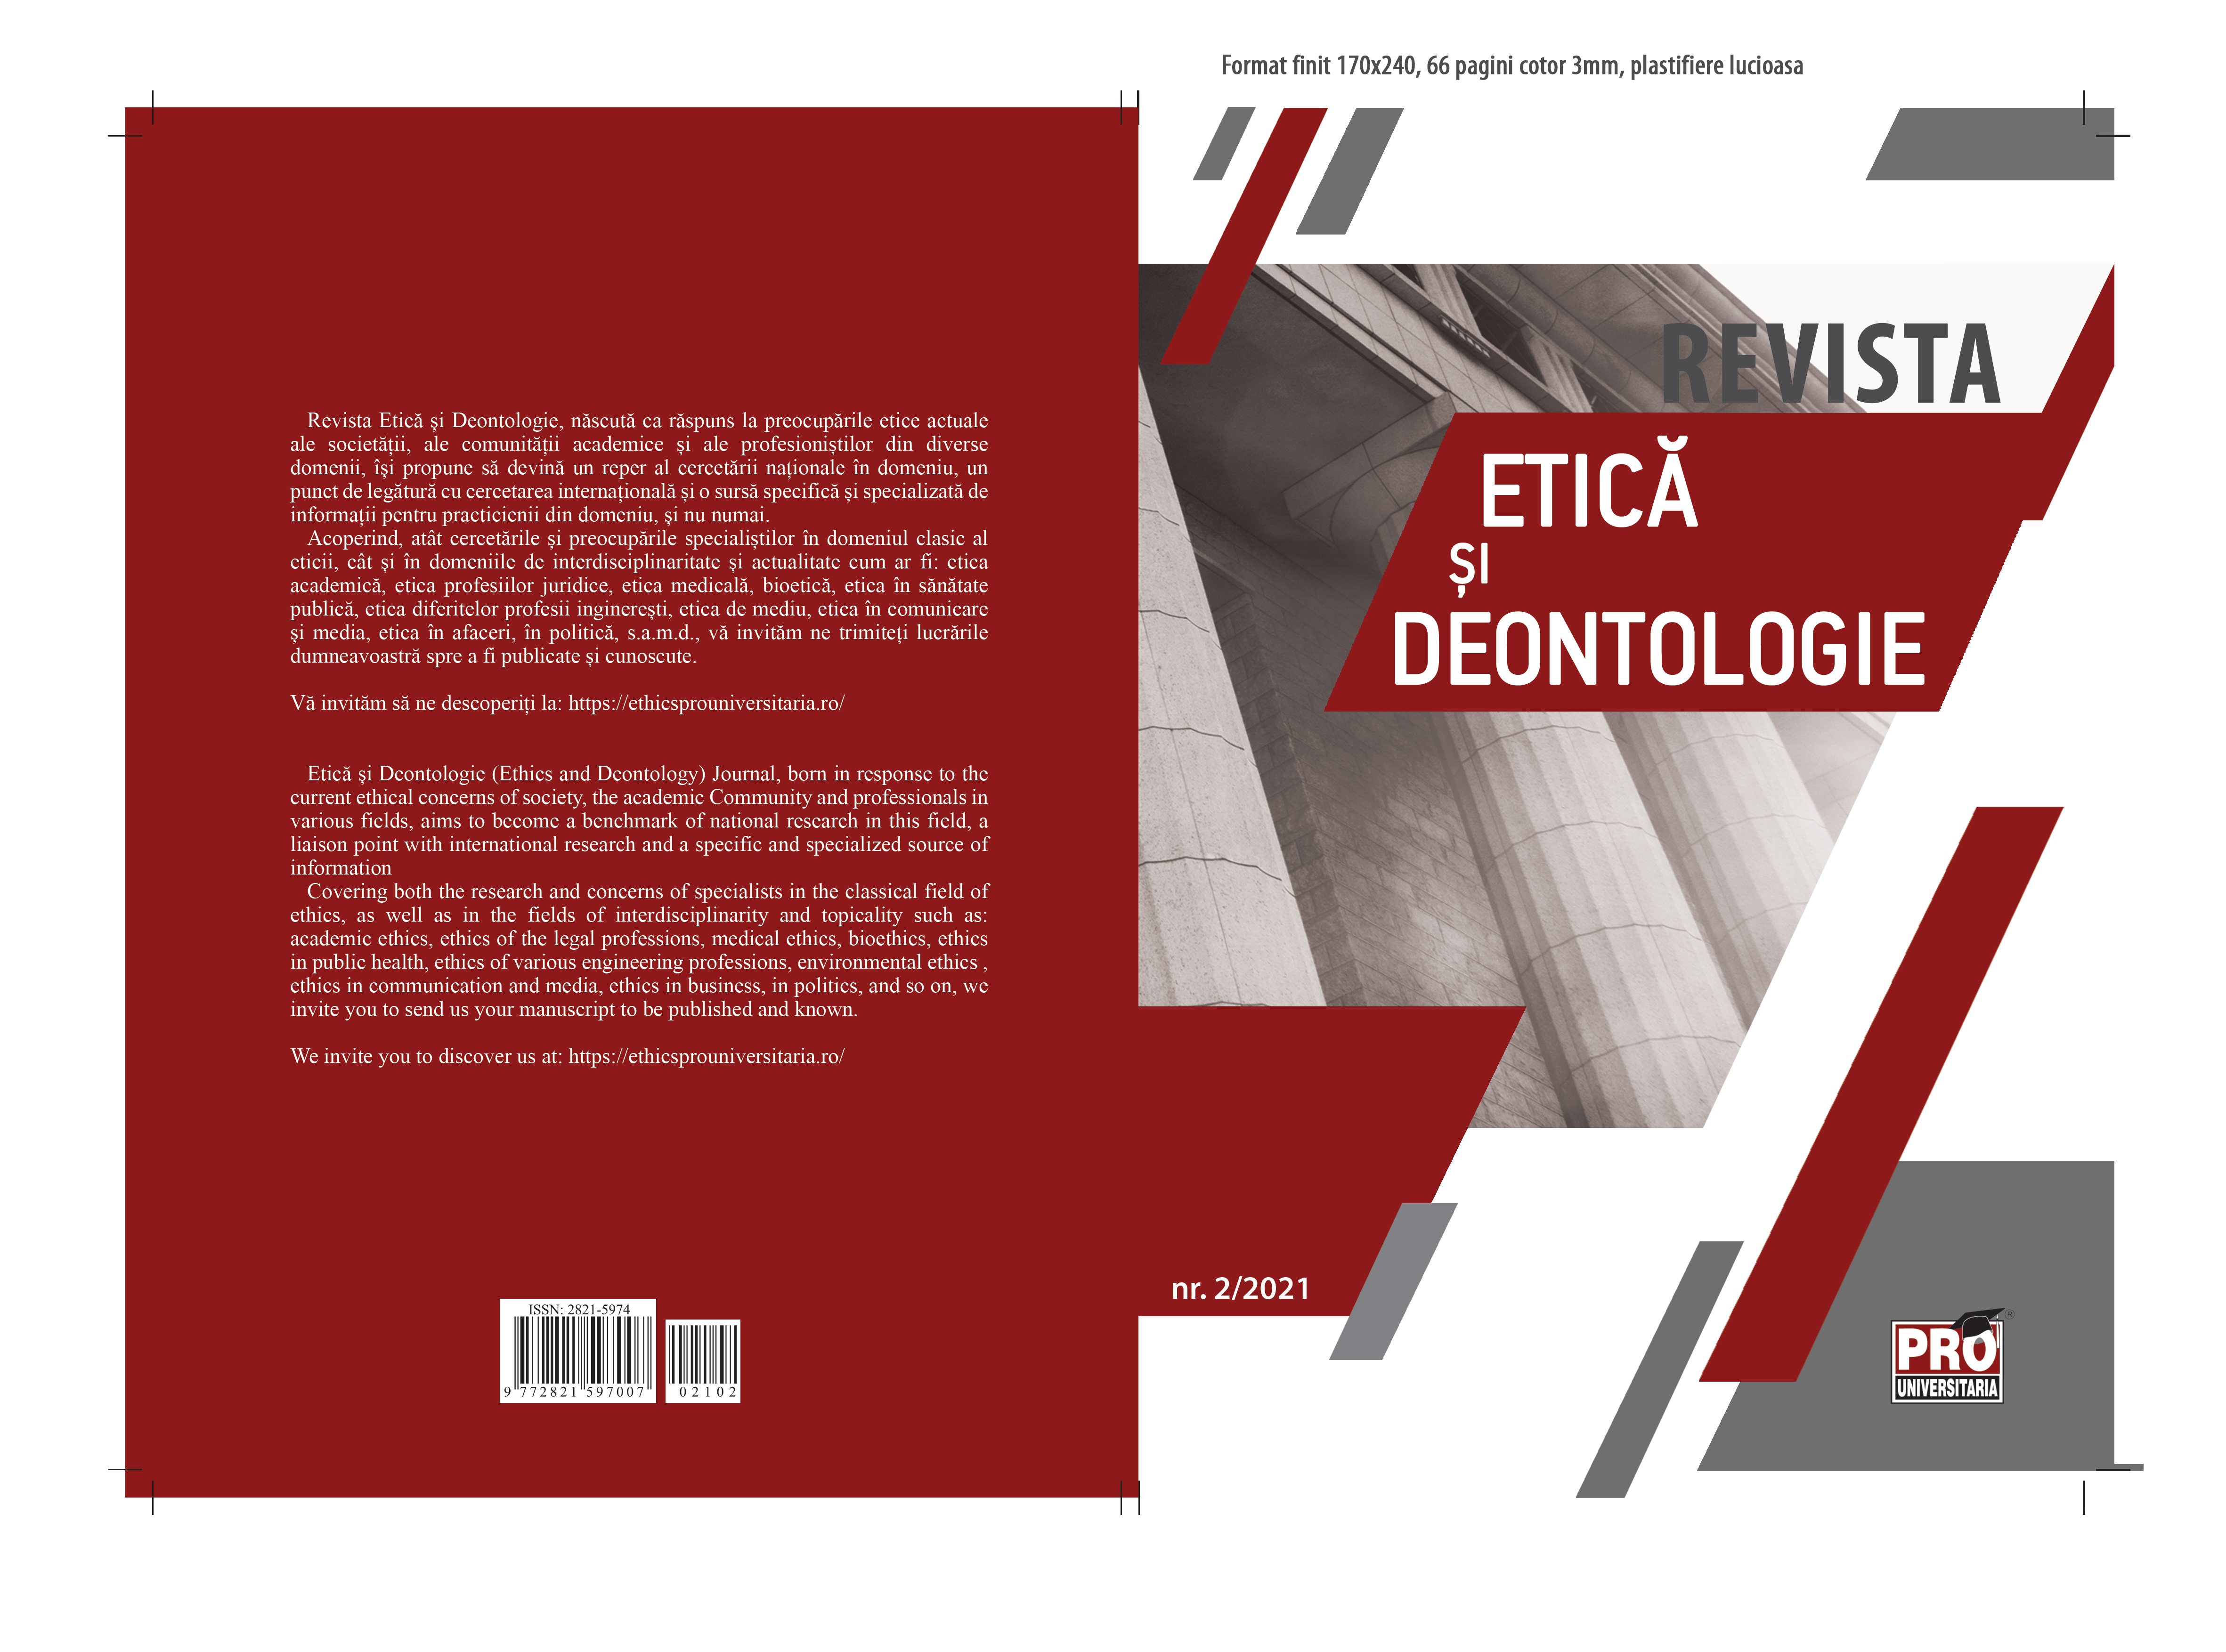 Scientometric study regardings ethics in professional activities Cover Image